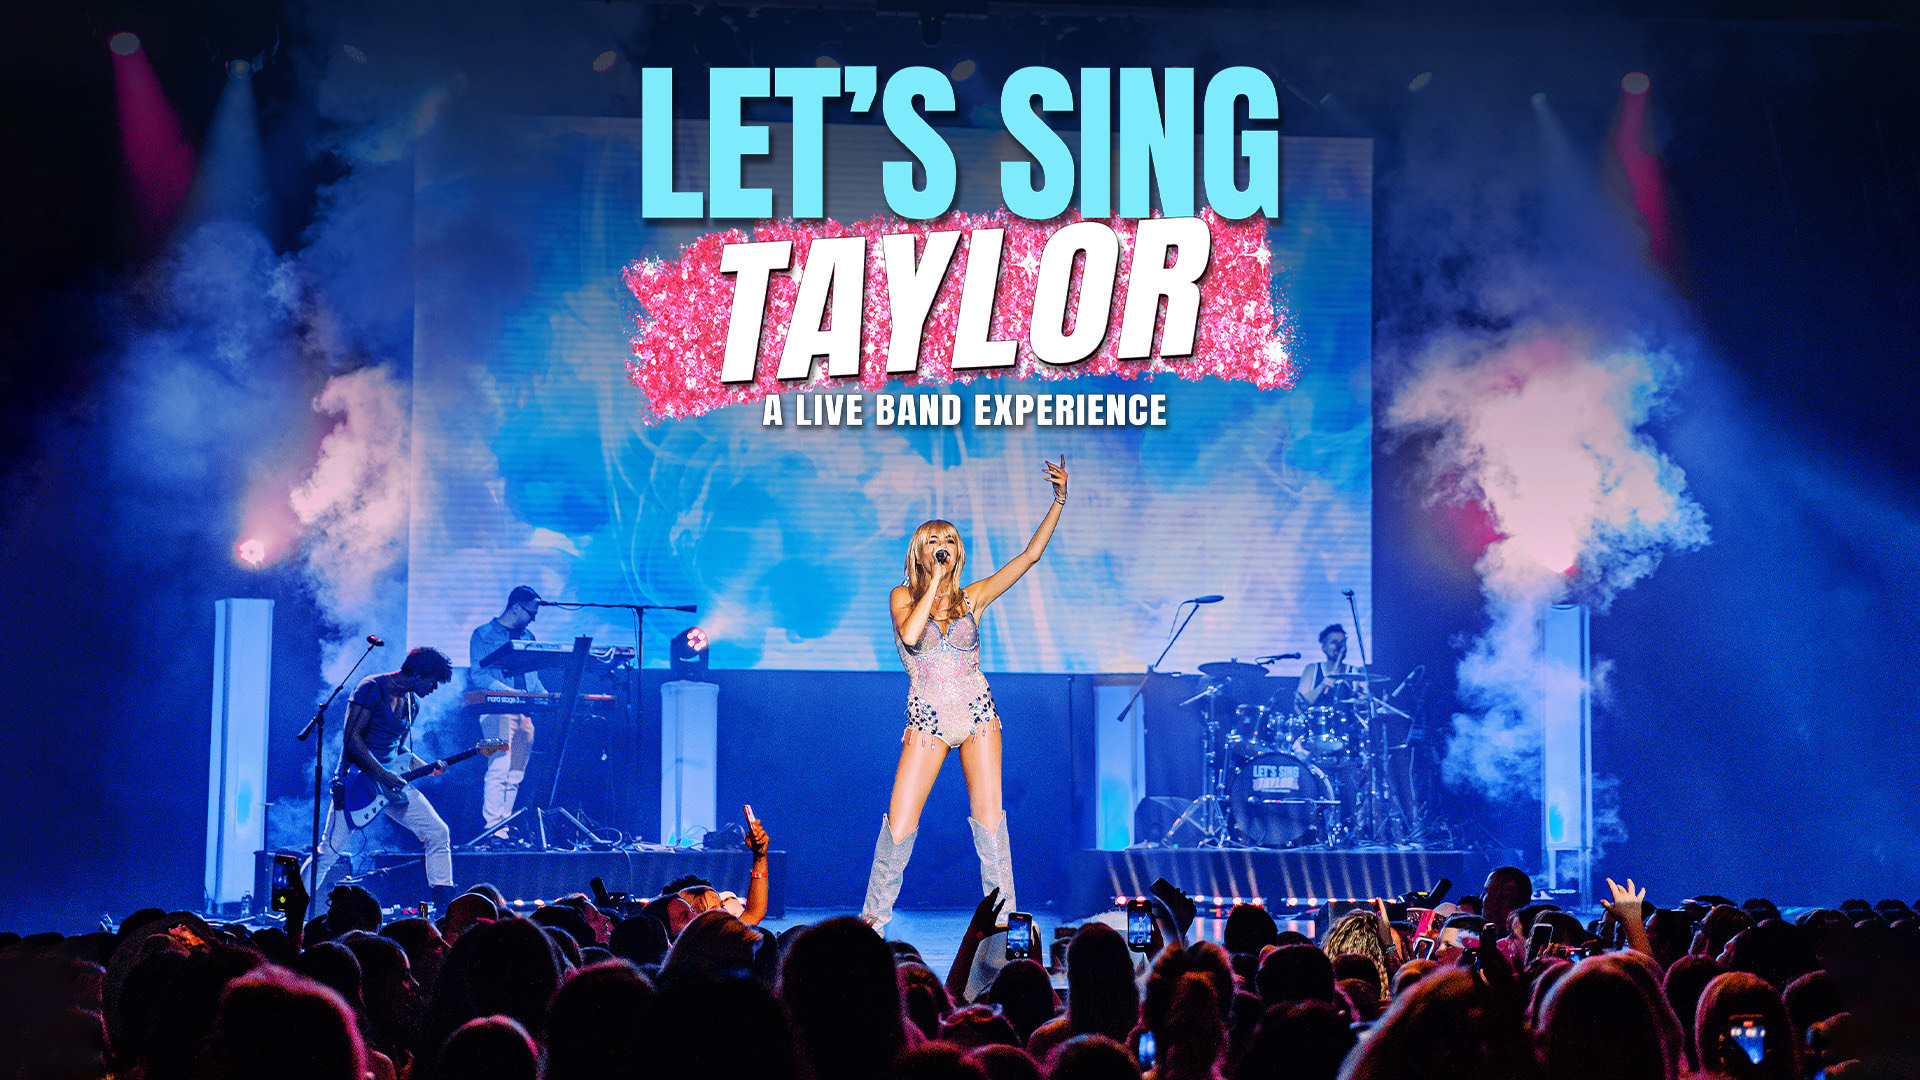 Stream Swiftie - Taylor Swift Tribute music